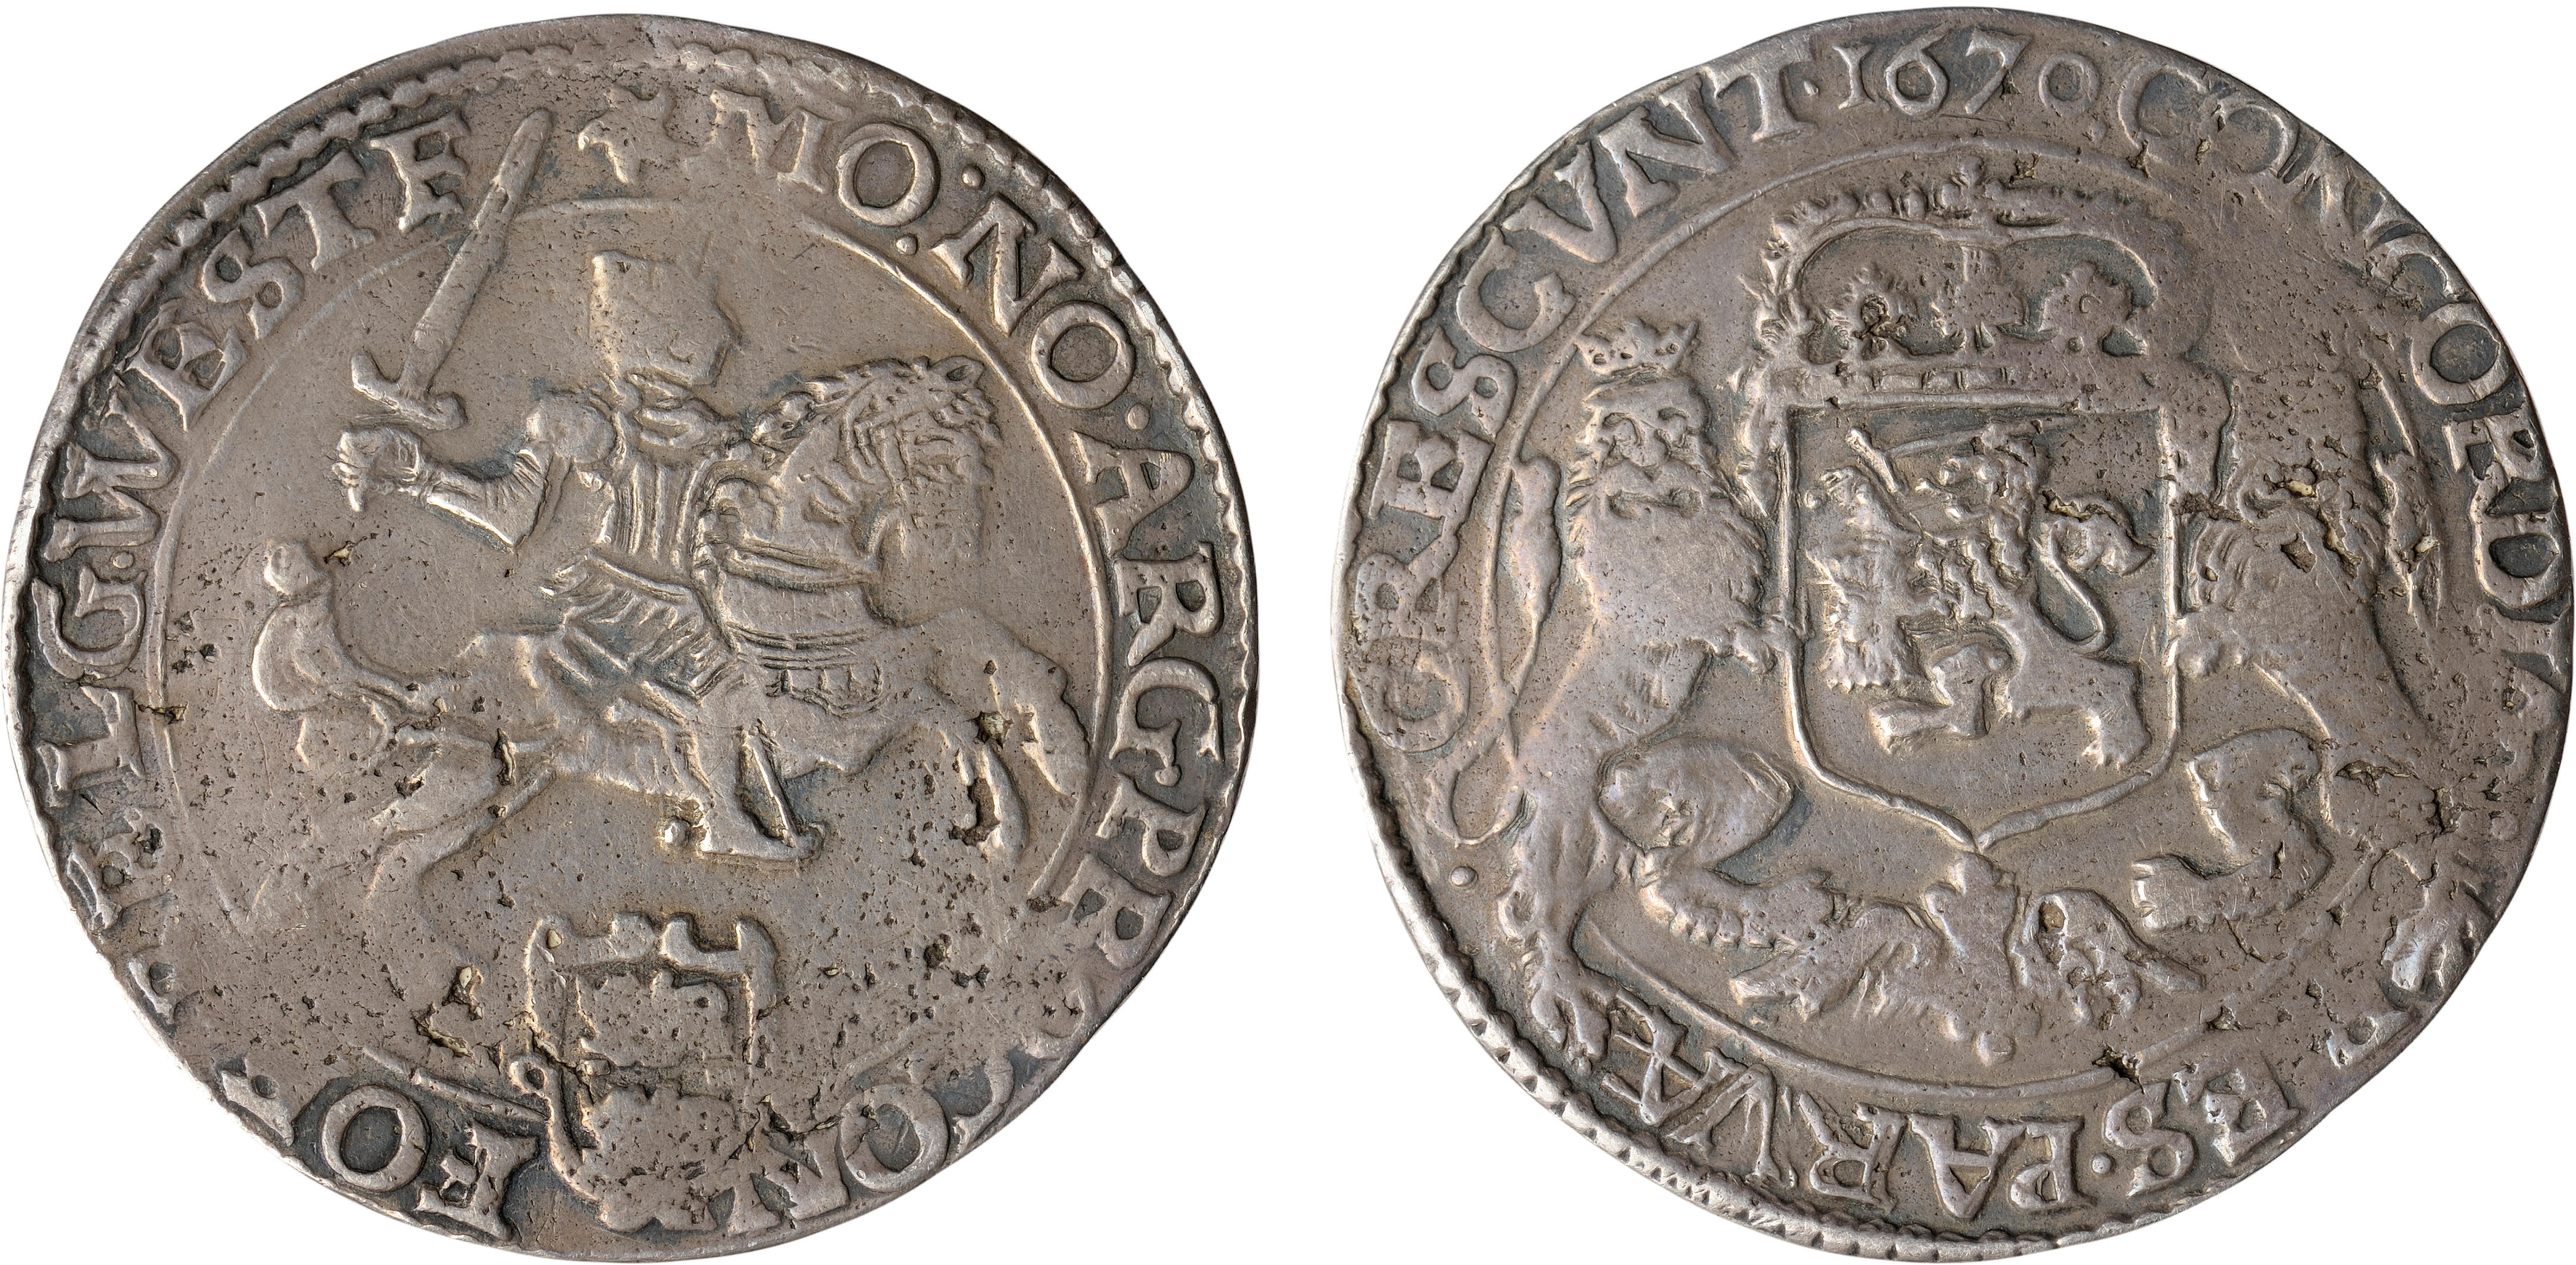 Netherlands, West Friesland, Silver Ducaton, 1670